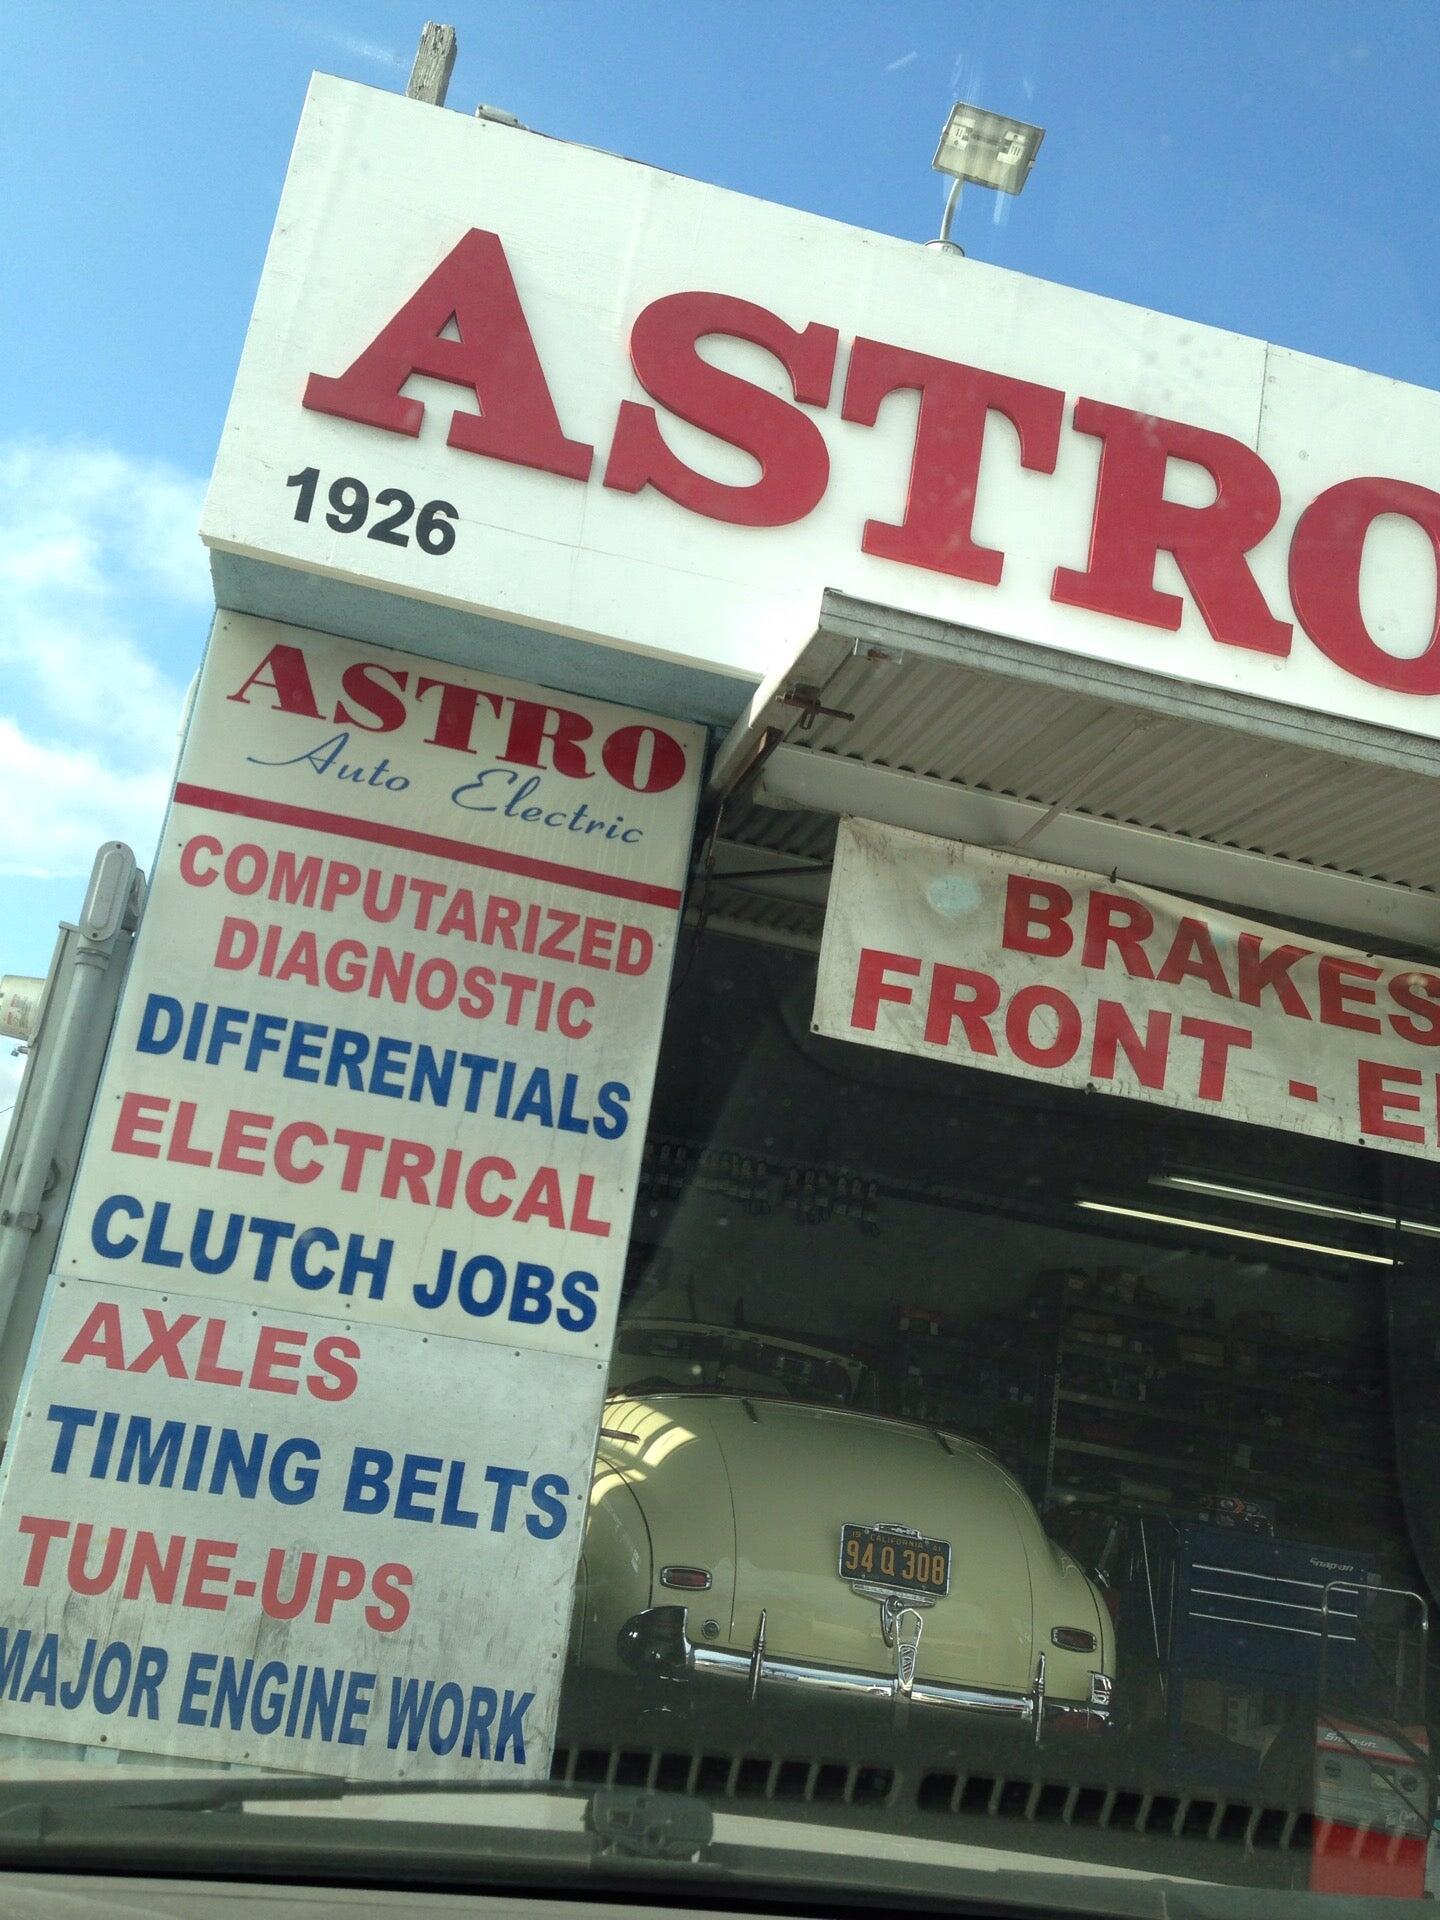 Astro Auto Electric